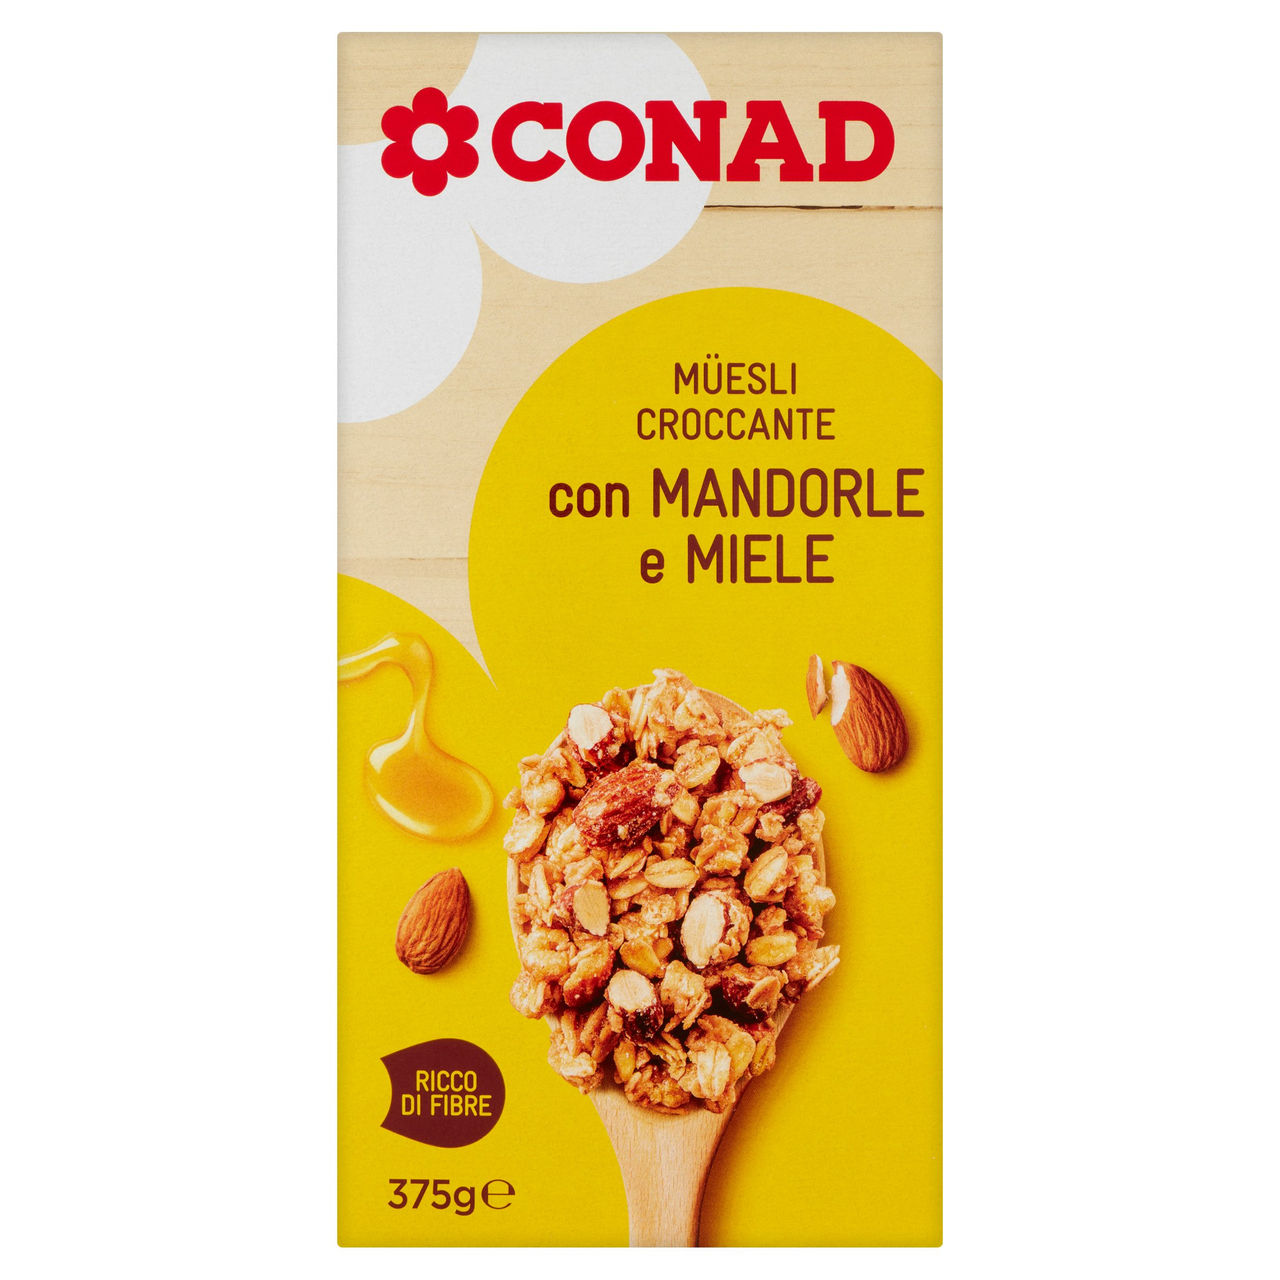 Muesli croccante mandorle e miele Conad online